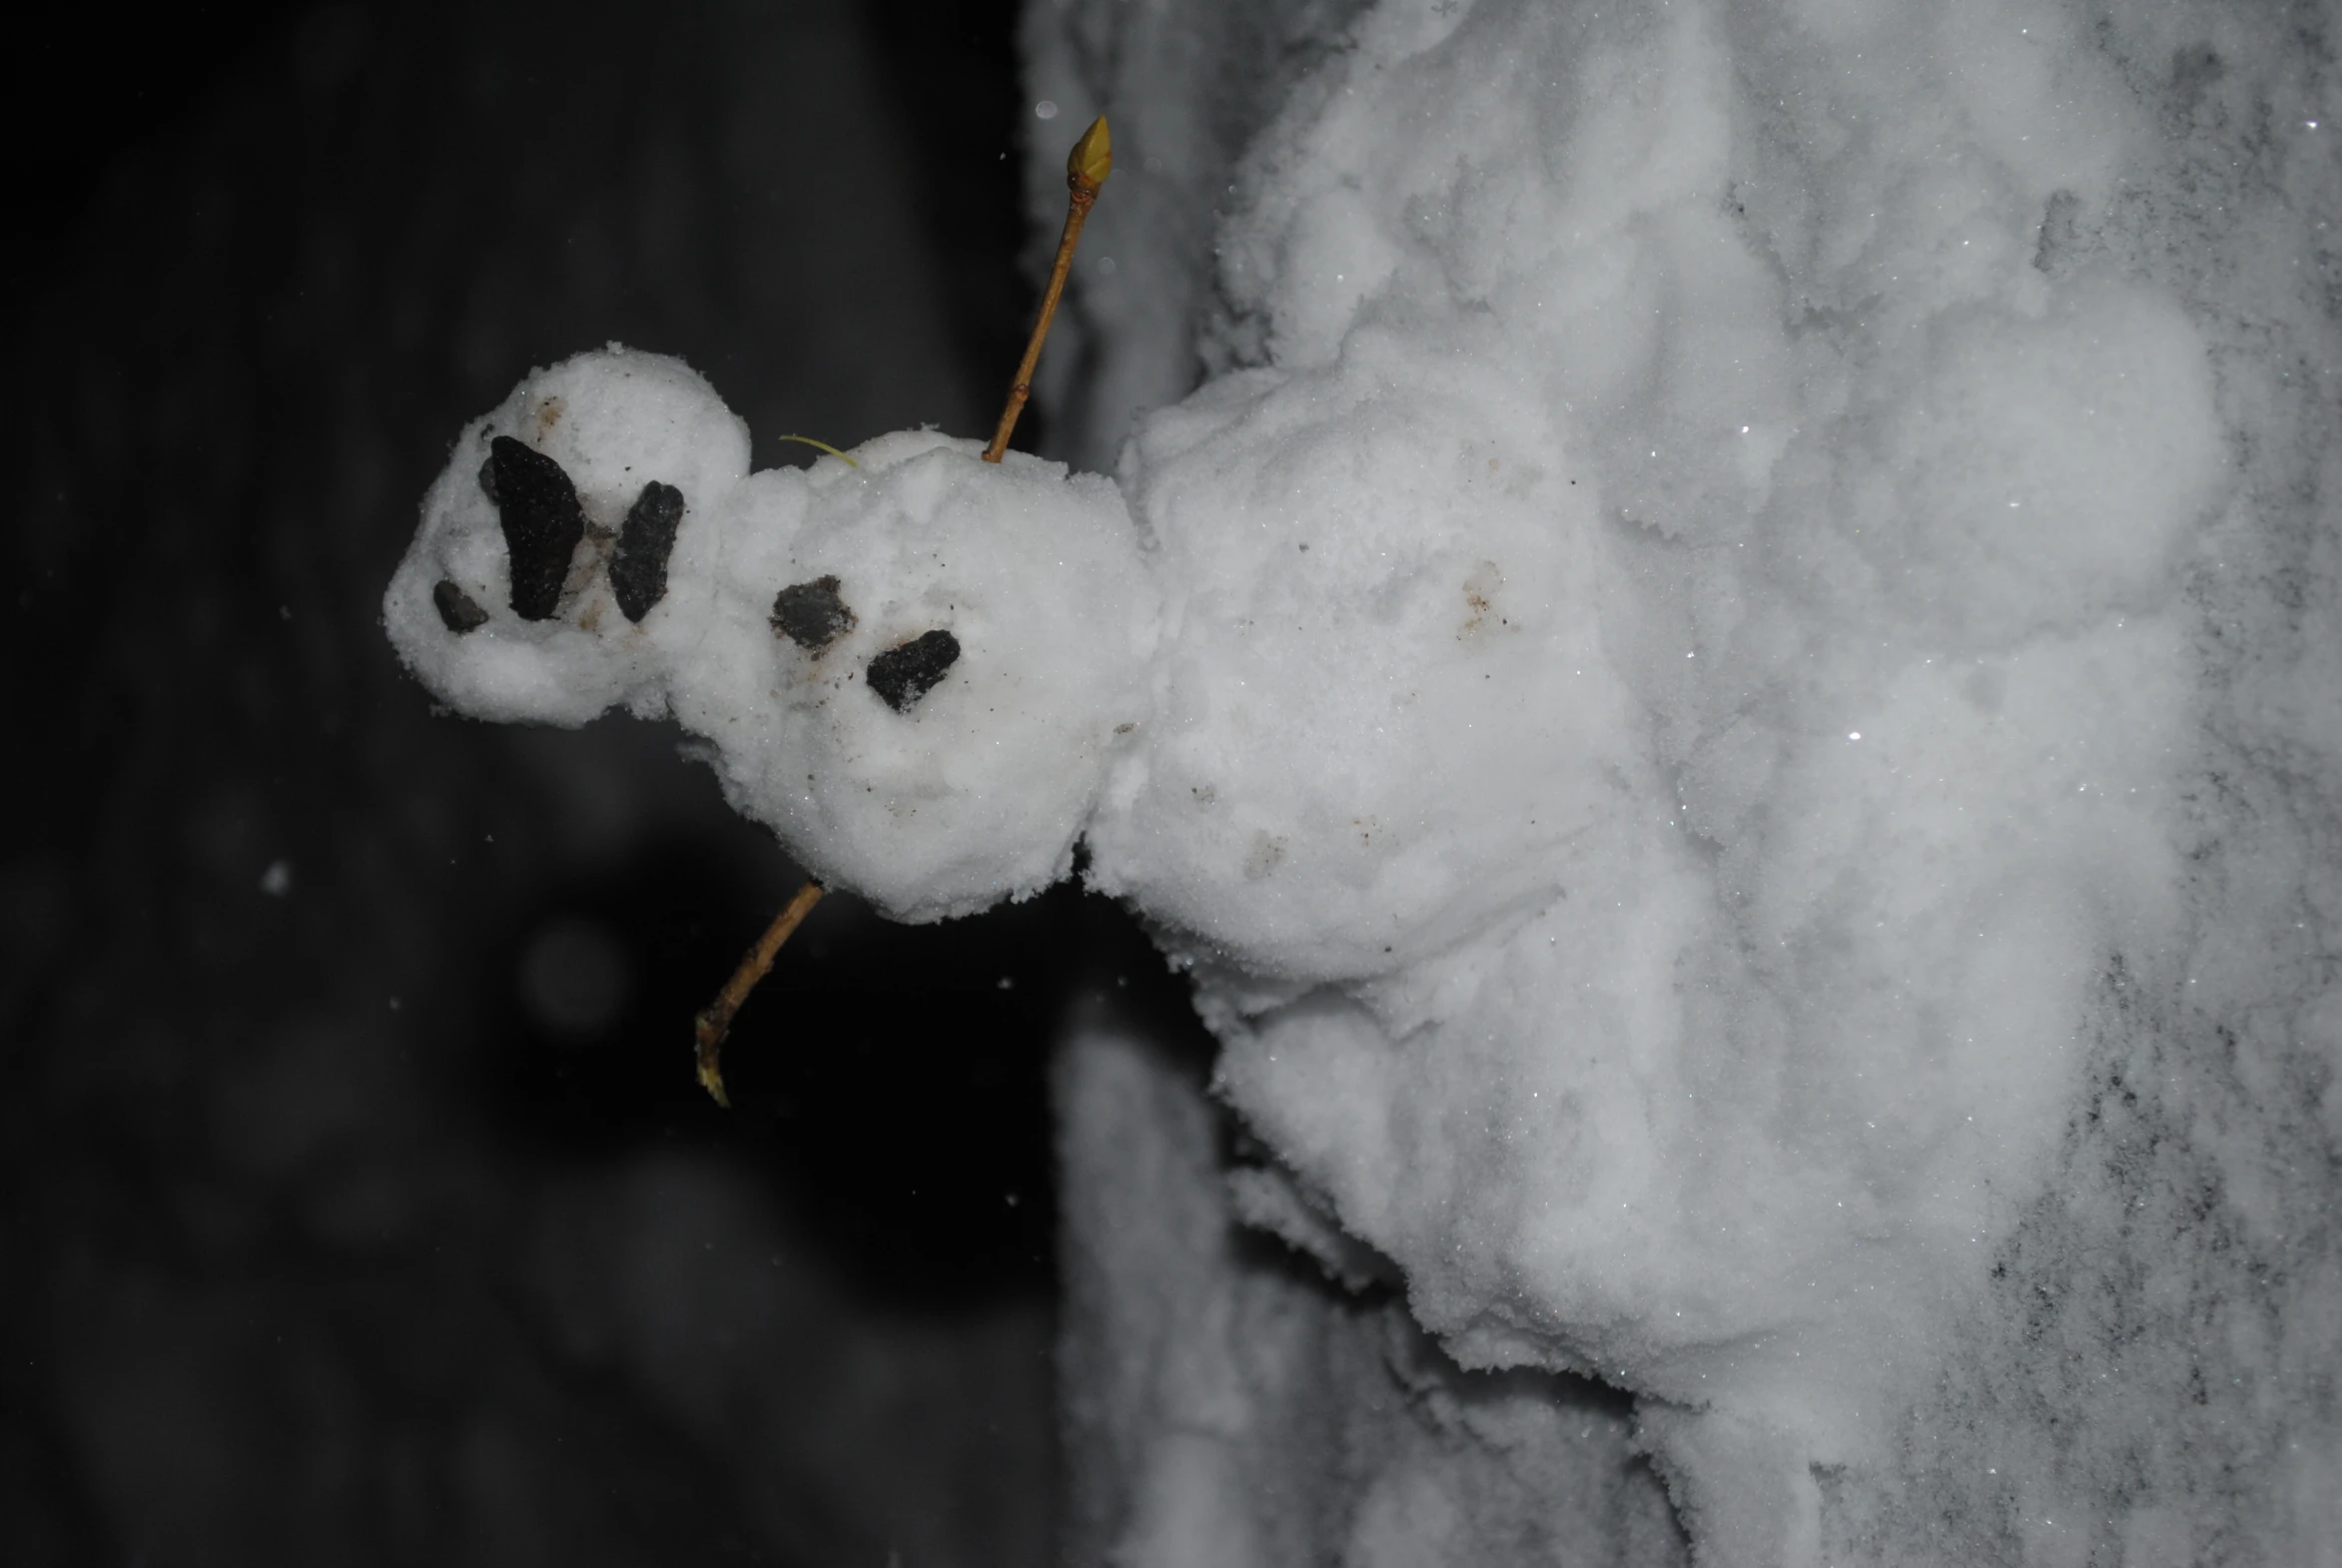 a snowman making a snow man on the edge of the sidewalk